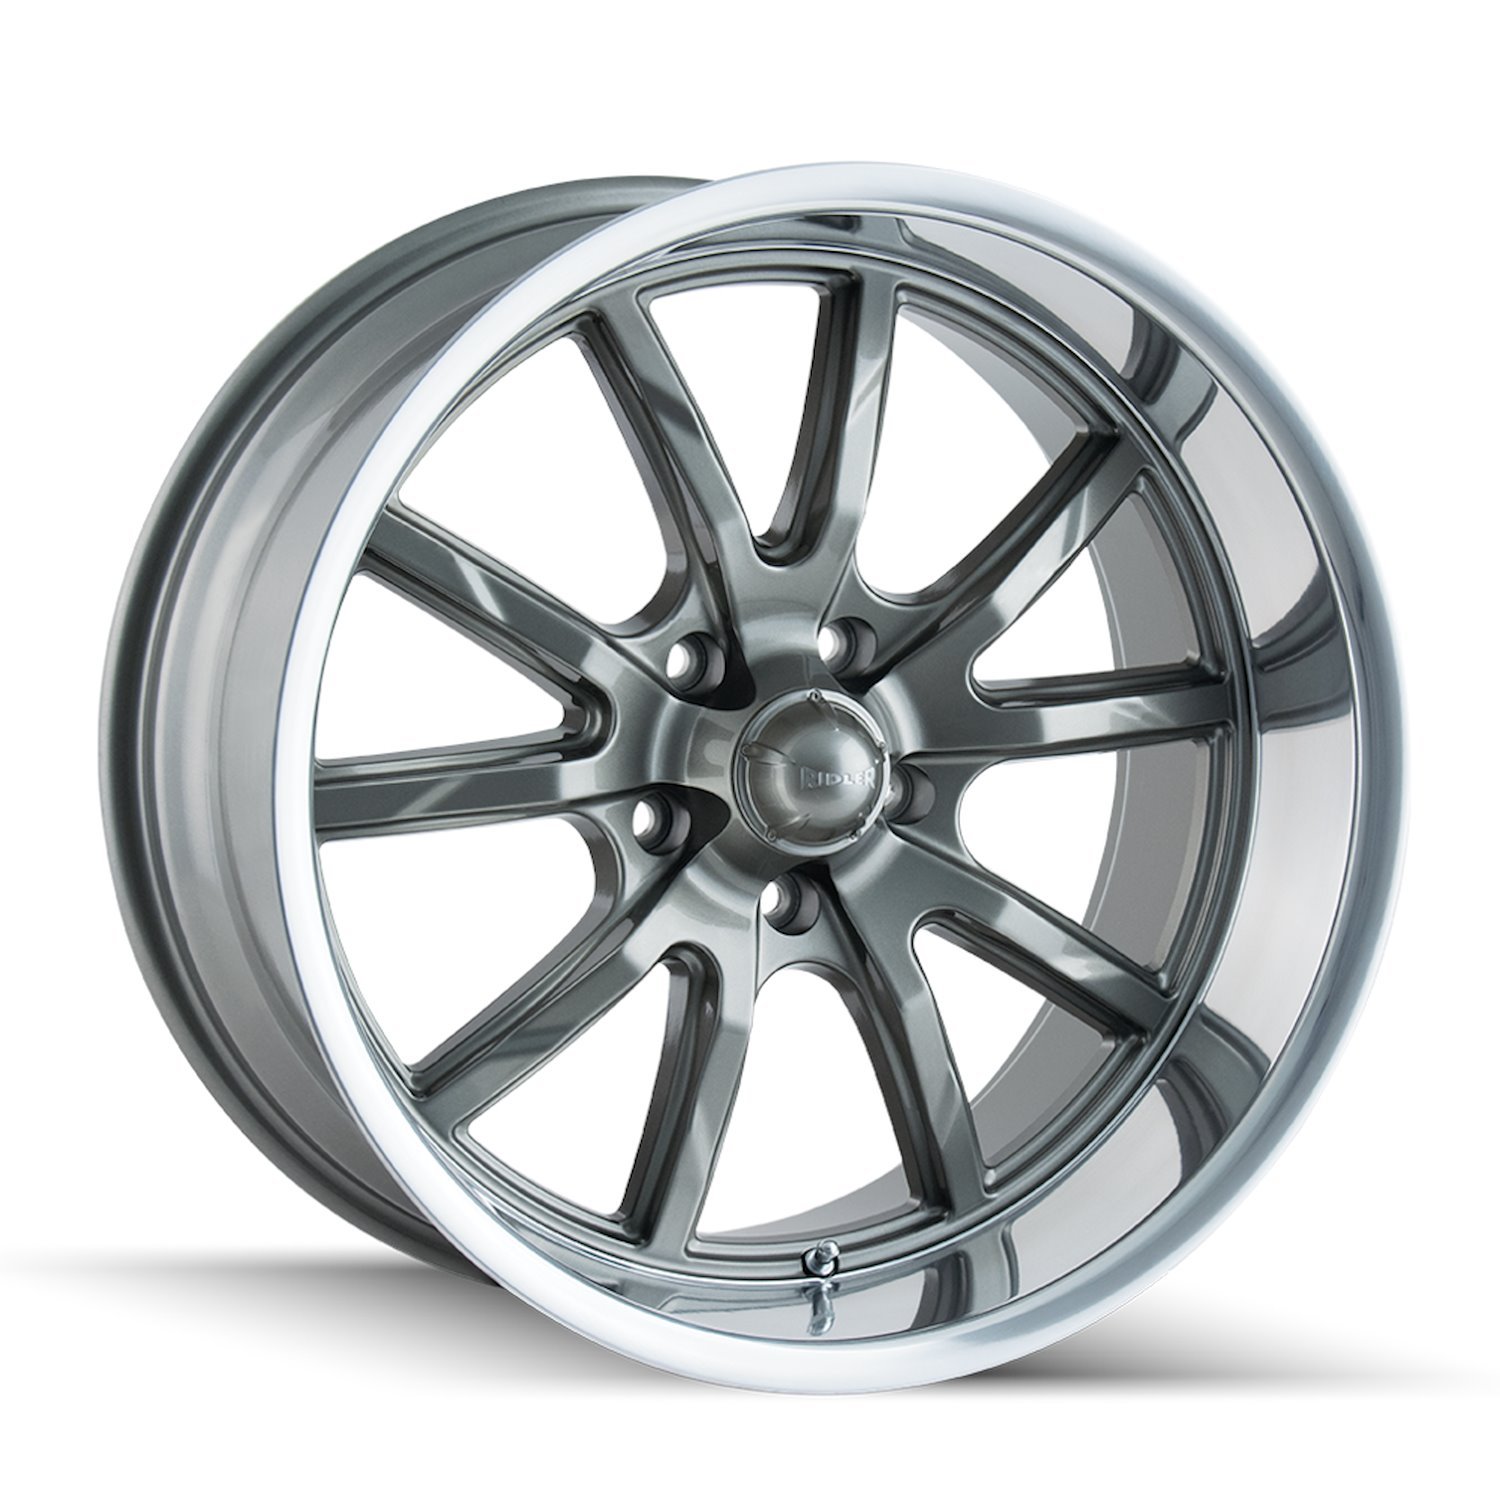 650-2873G 650-Series Wheel [Size: 20" x 8.50"] Gloss Grey Polished Finish